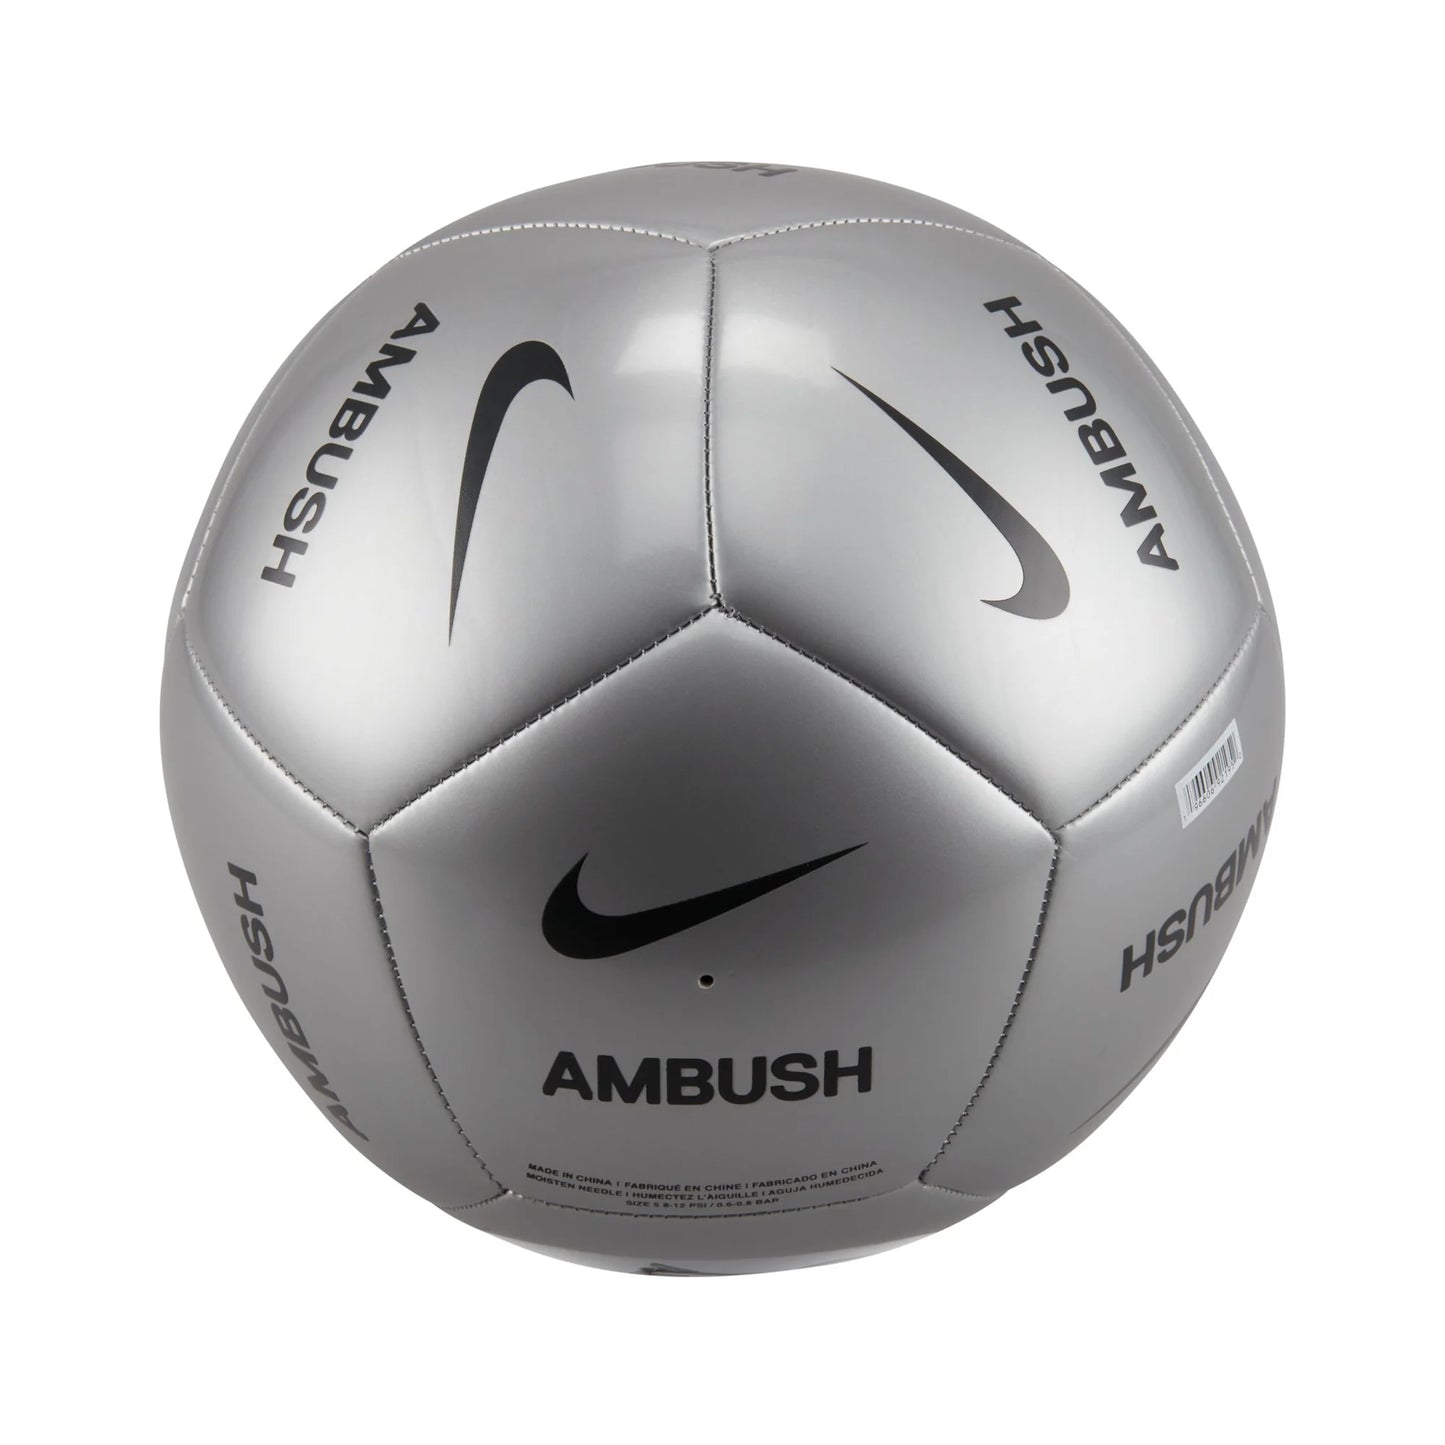 Ambush x Nike Soccer Ball